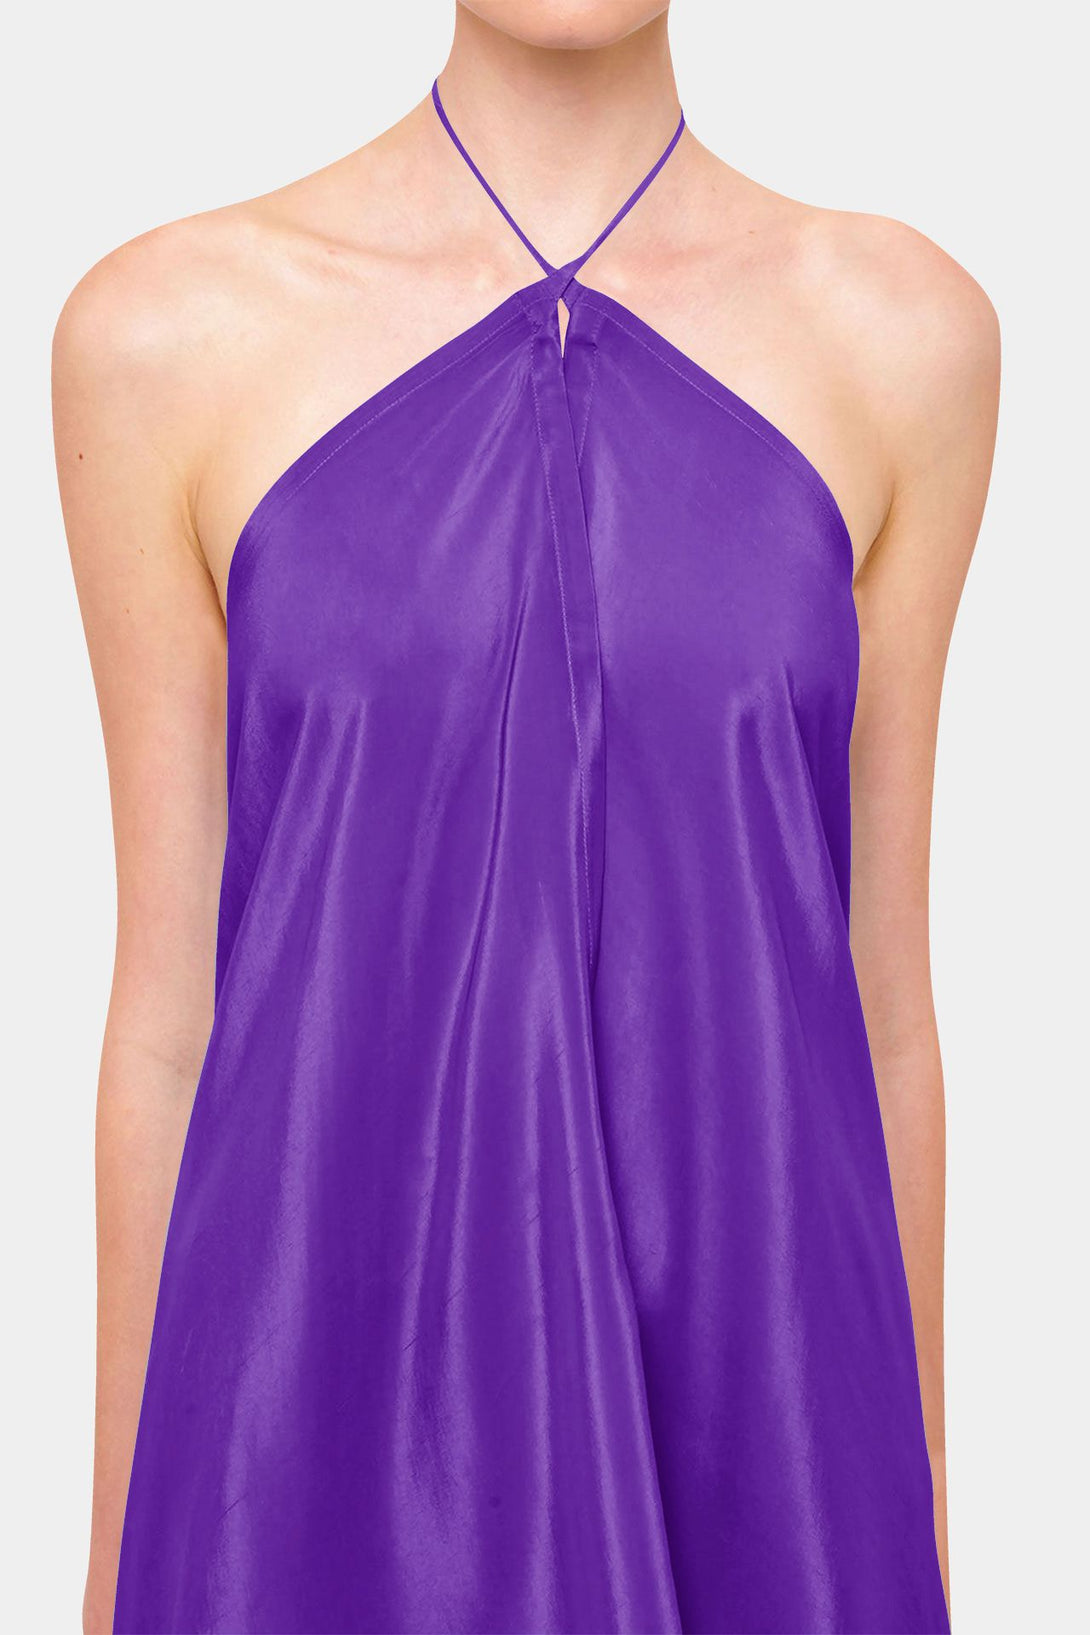  short purple party dress, short frock for women party wear, Shahida Parides, sleeveless short dress,